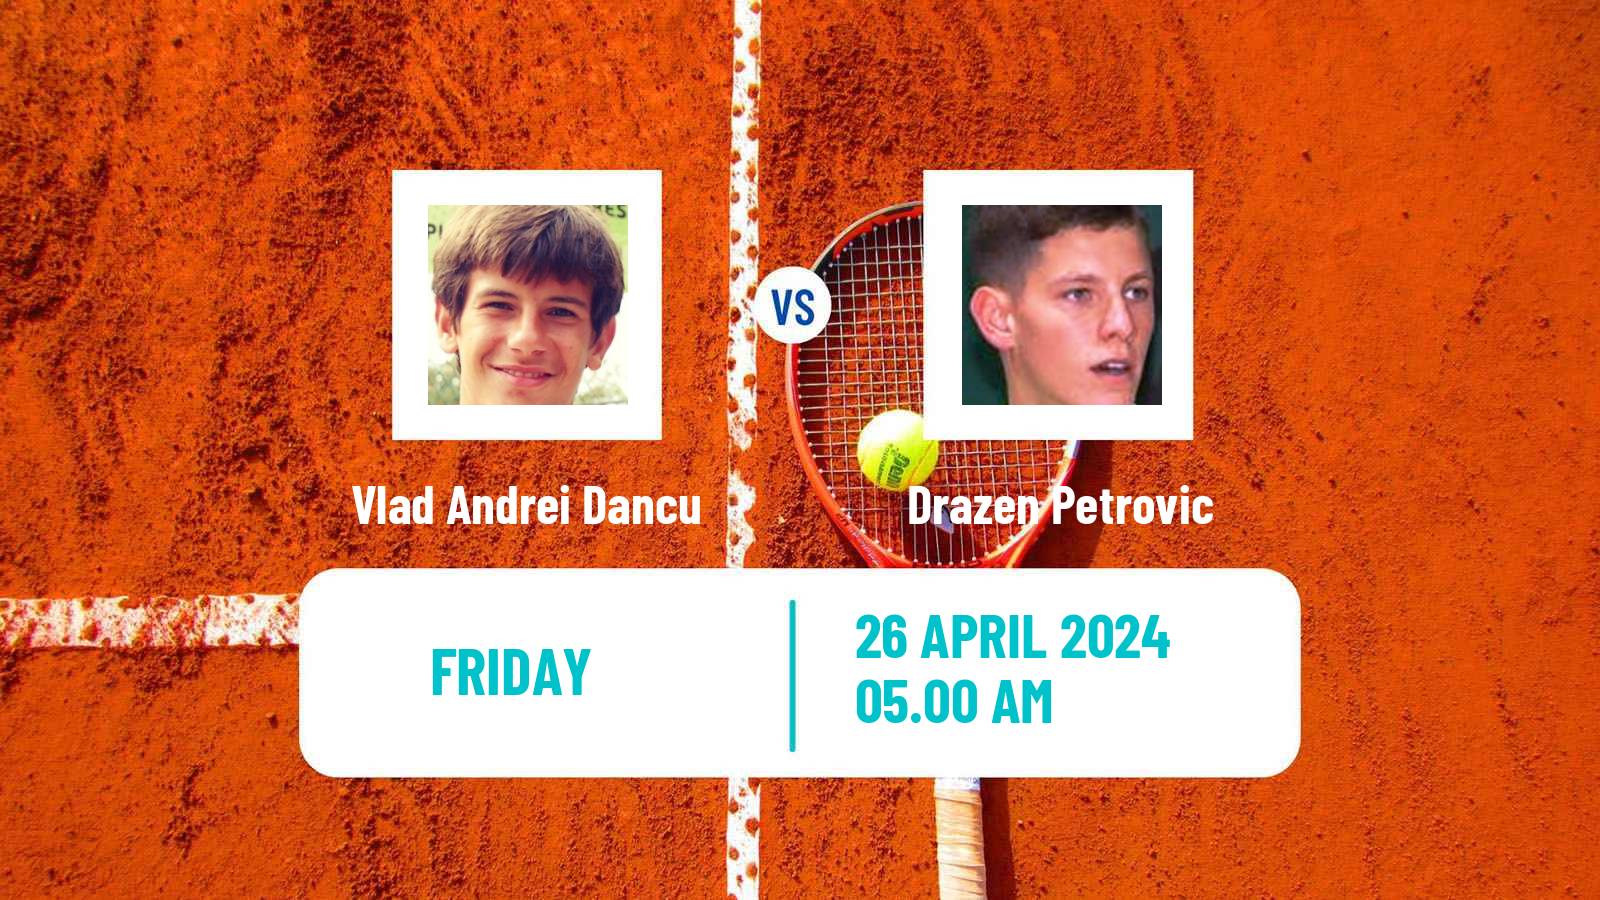 Tennis ITF M15 Kursumlijska Banja 2 Men Vlad Andrei Dancu - Drazen Petrovic